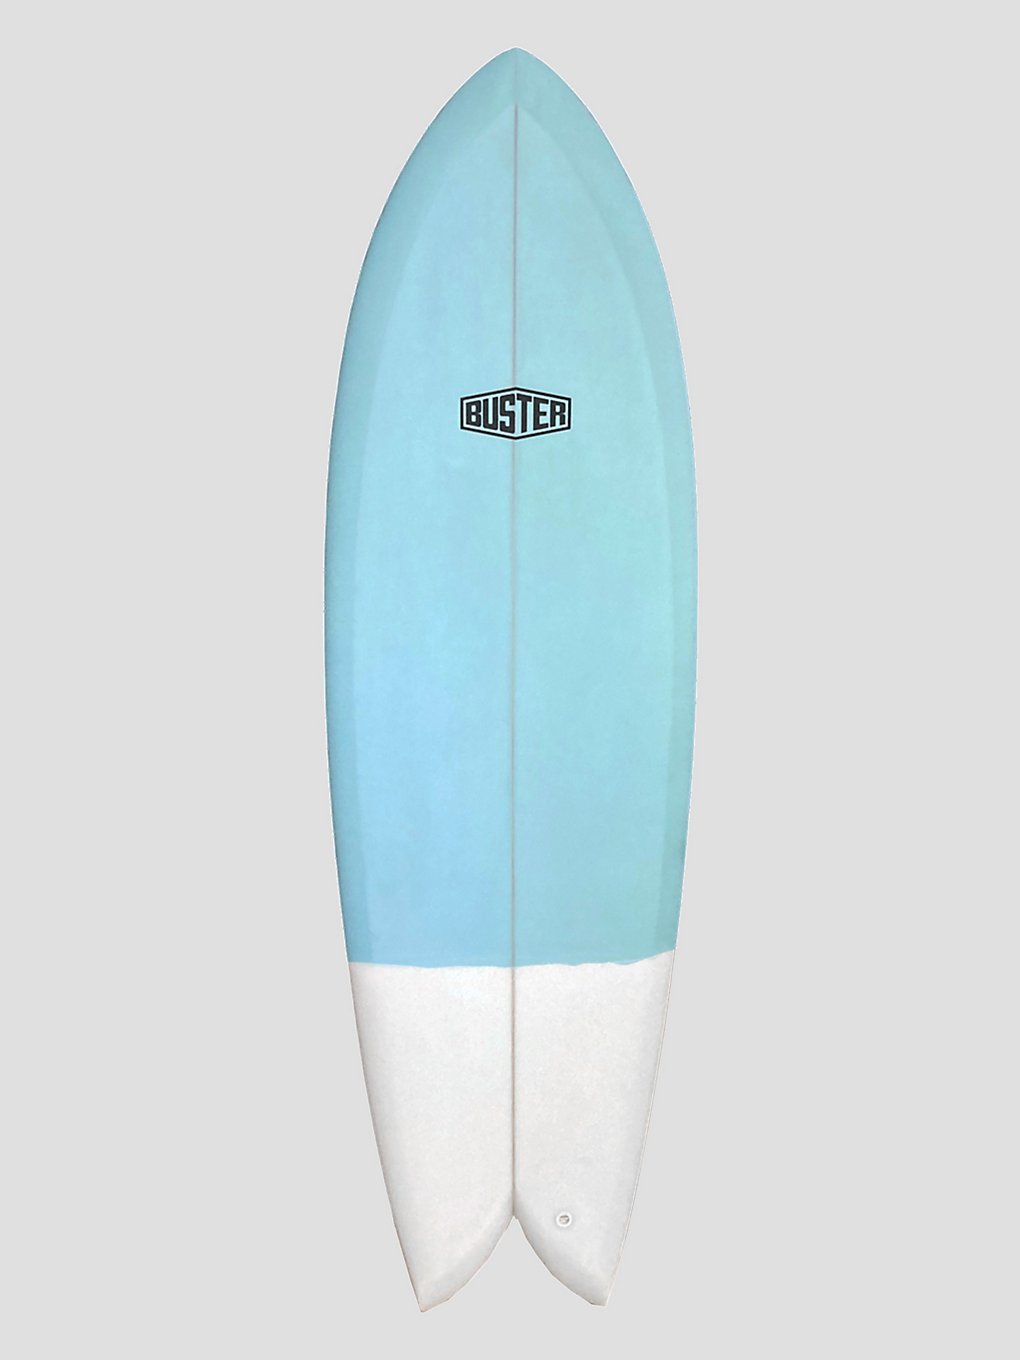 Buster 6'4 Retro Fish Surfboard blau